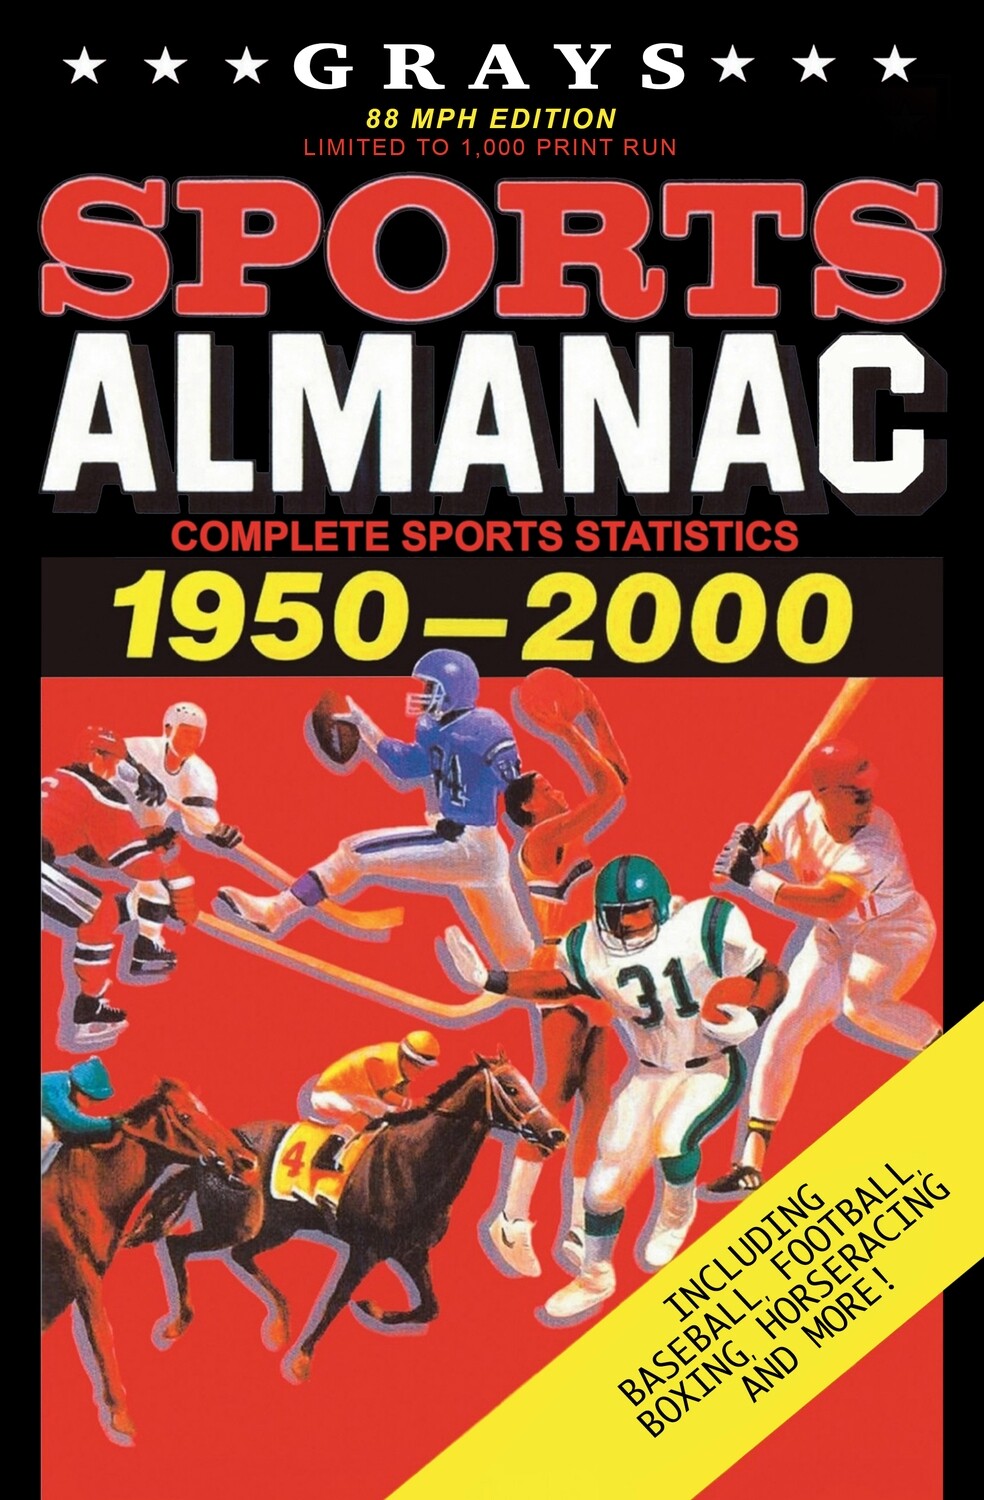 Grays Sports Almanac: Complete Sports Statistics 1951-2000 [88MPH EDITION - LIMITED TO 1,000 PRINT RUN] Back to the Future Movie Prop Replica